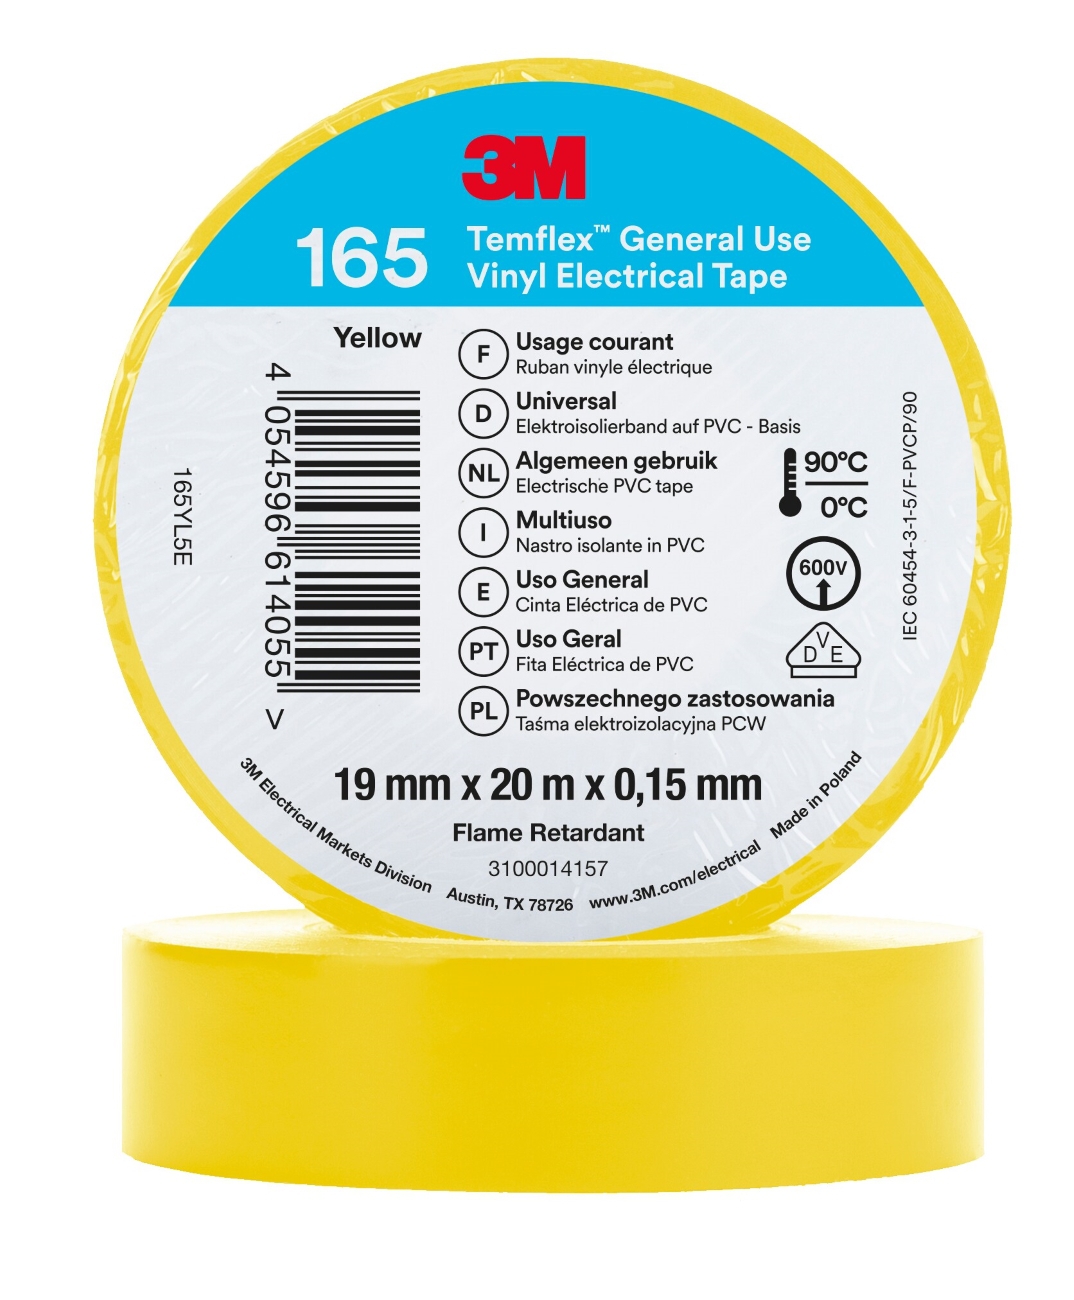 3M Temflex 165 vinyl electrical insulating tape, yellow, 19 mm x 20 m, 0.15 mm